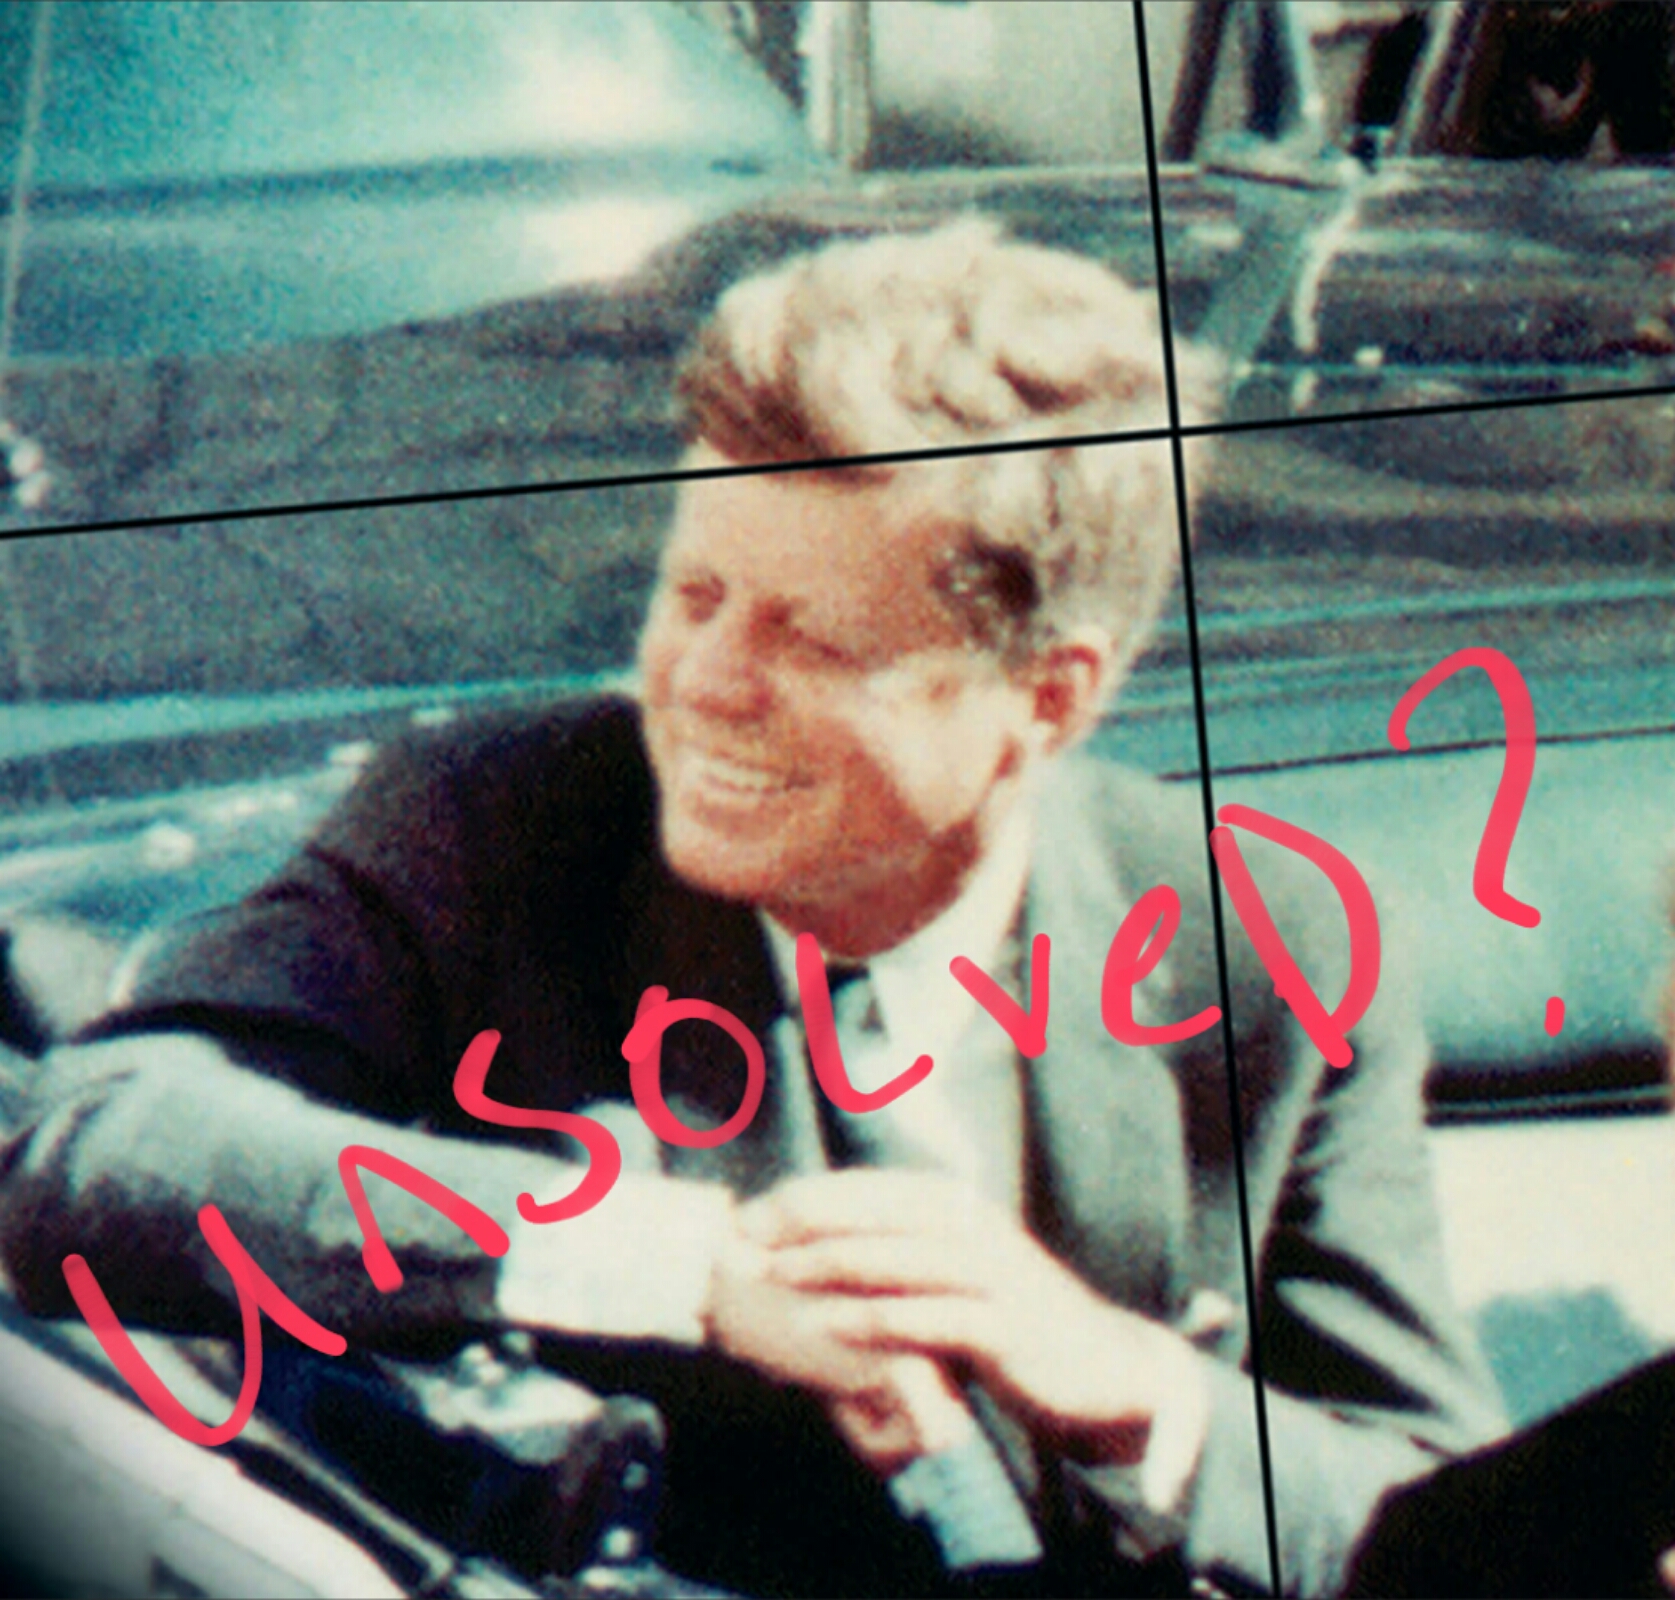 Kennedy Assassination